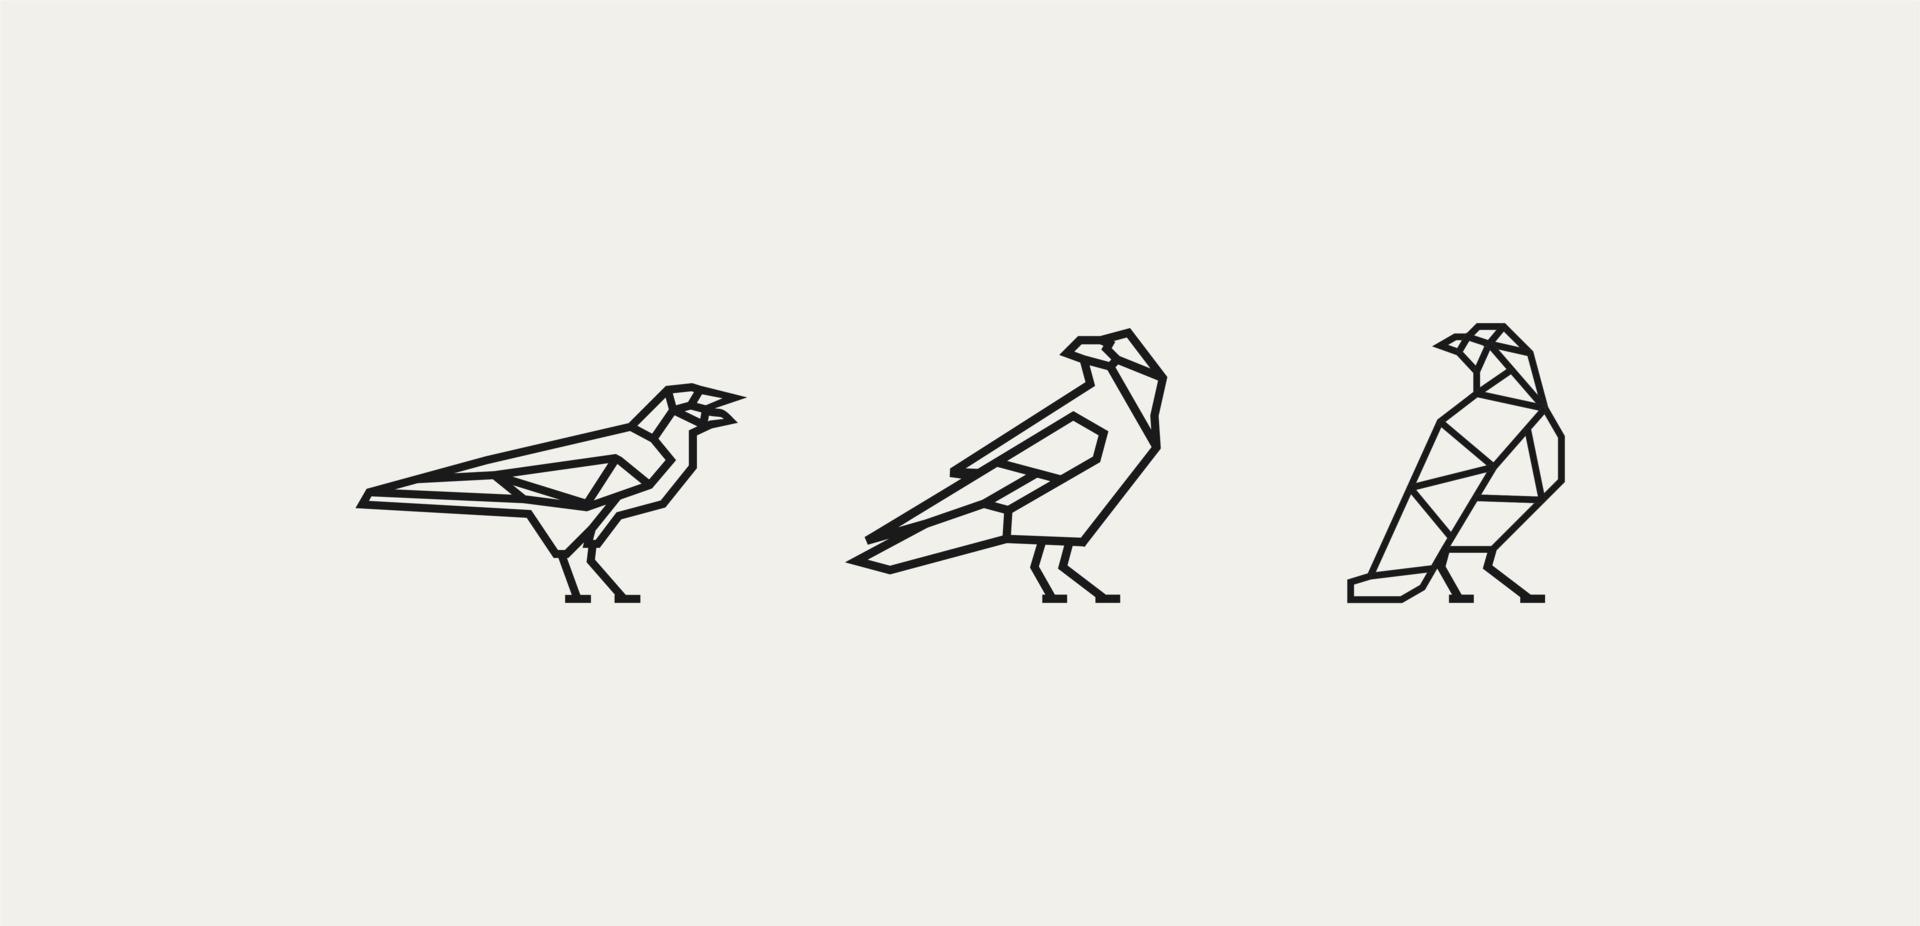 Crows line art, simple crows masculine line art vector